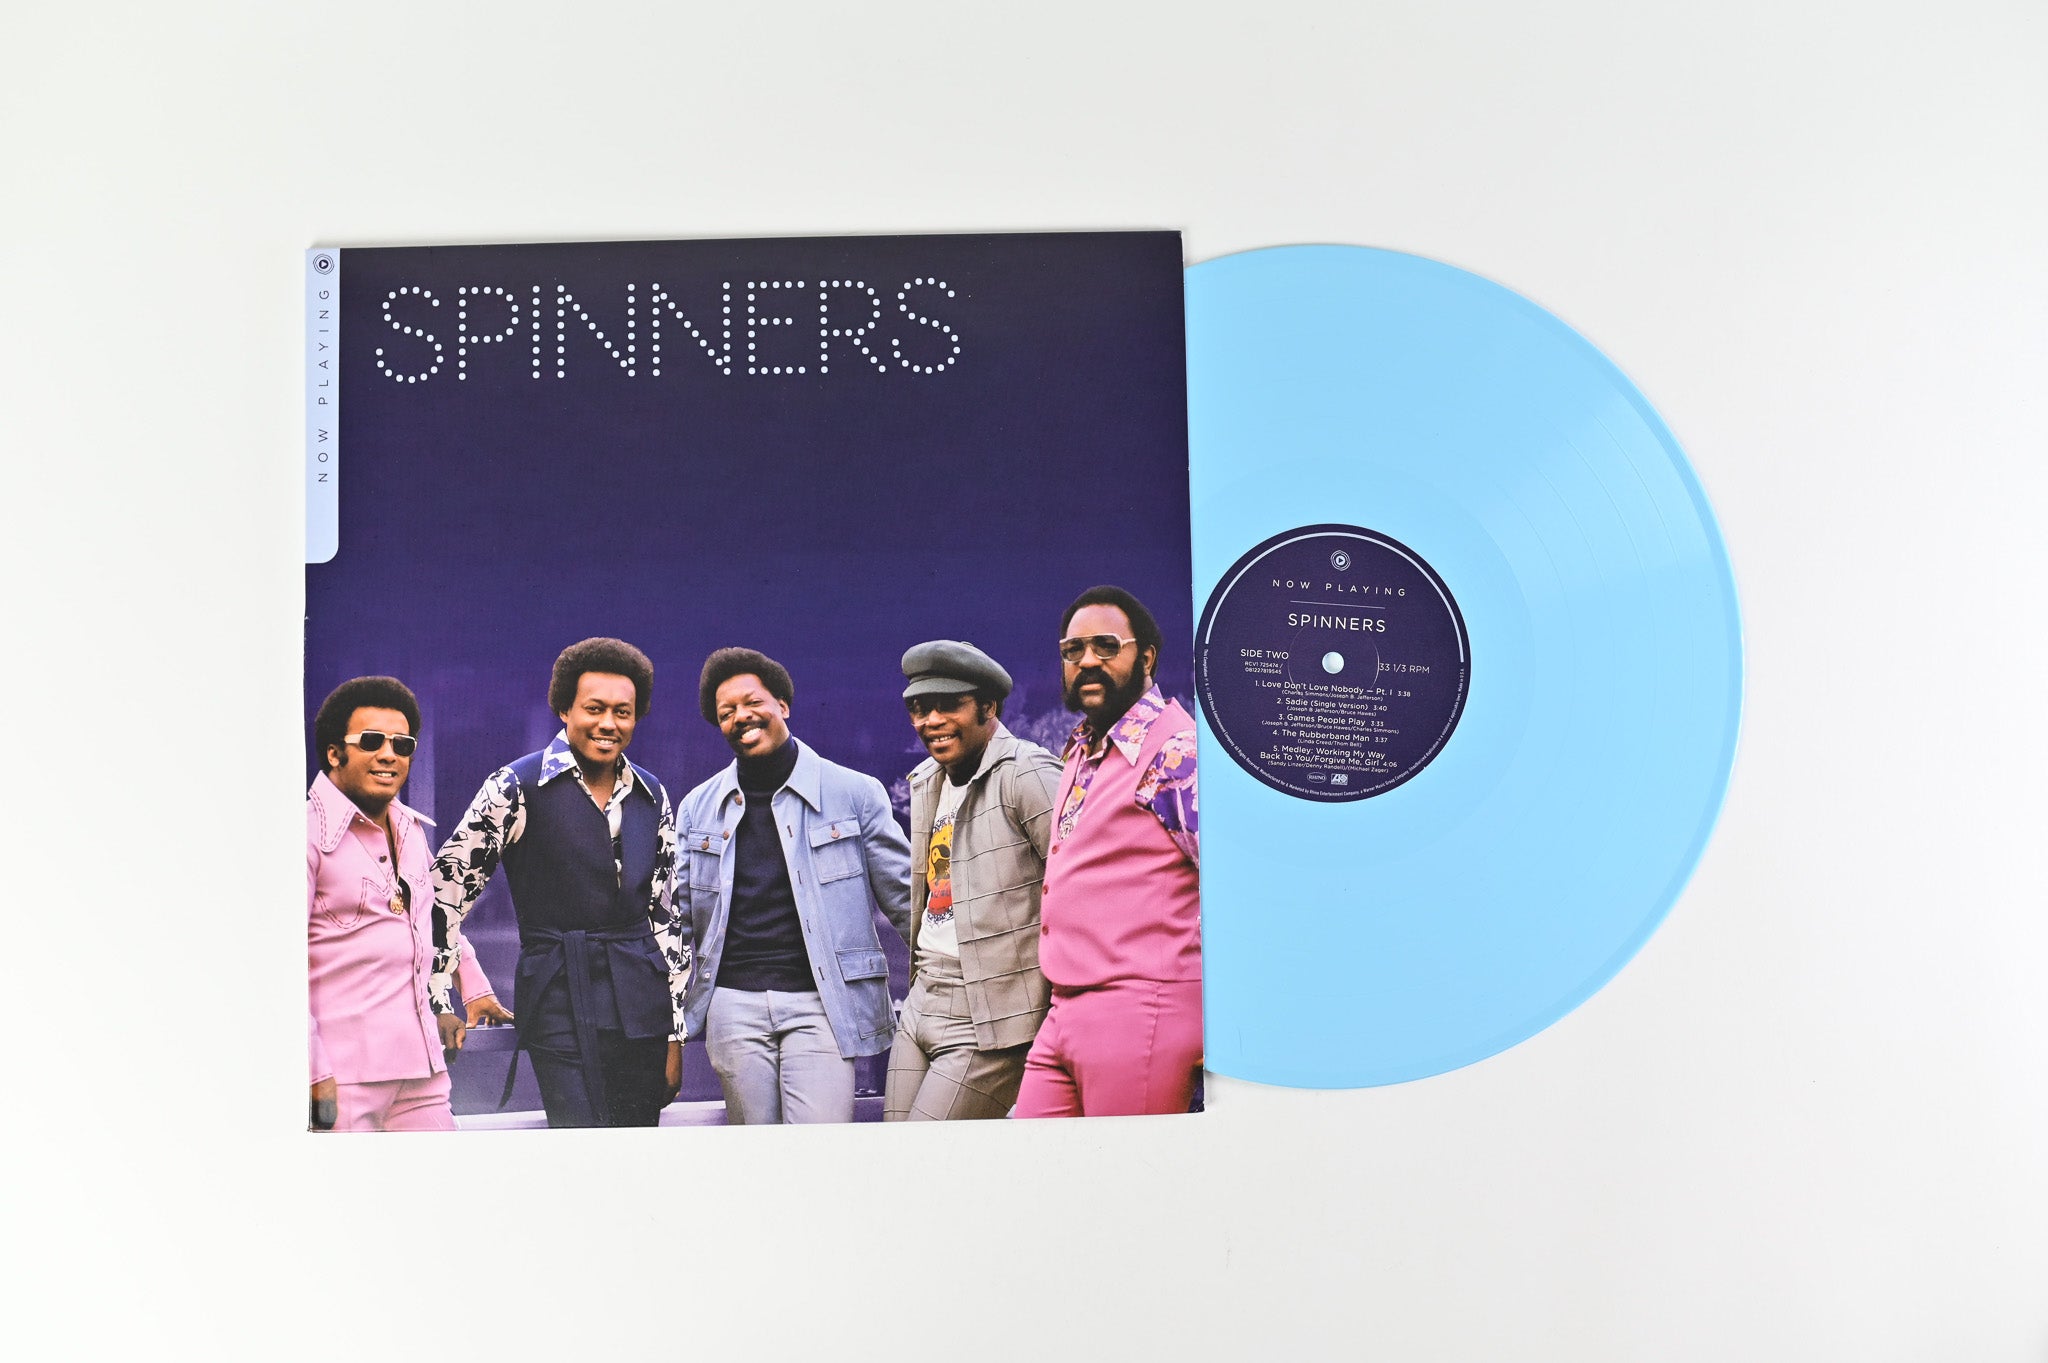 Spinners - Now Playing on Rhino / Atlantic - Blue Vinyl